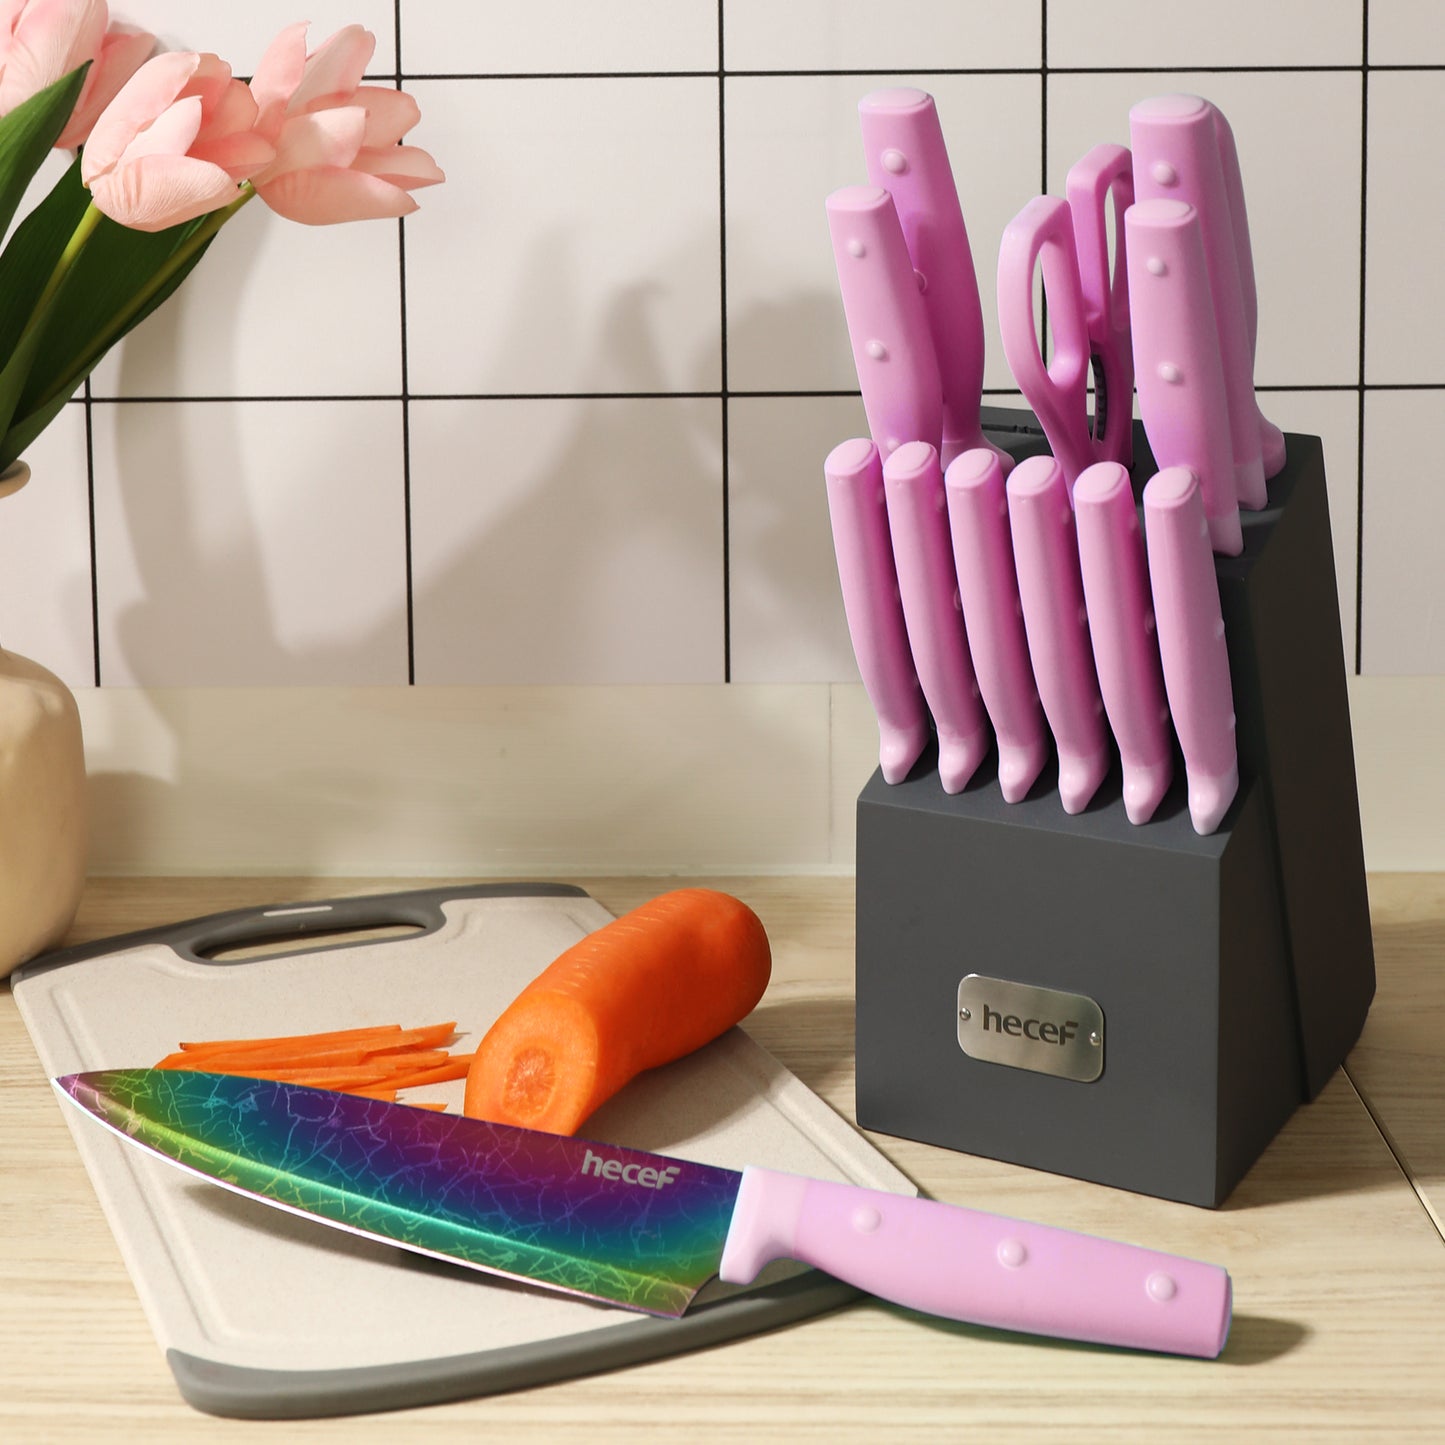 HAUSHOF Kitchen Knife Set 5 Pieces Rainbow Knife Sets with Block